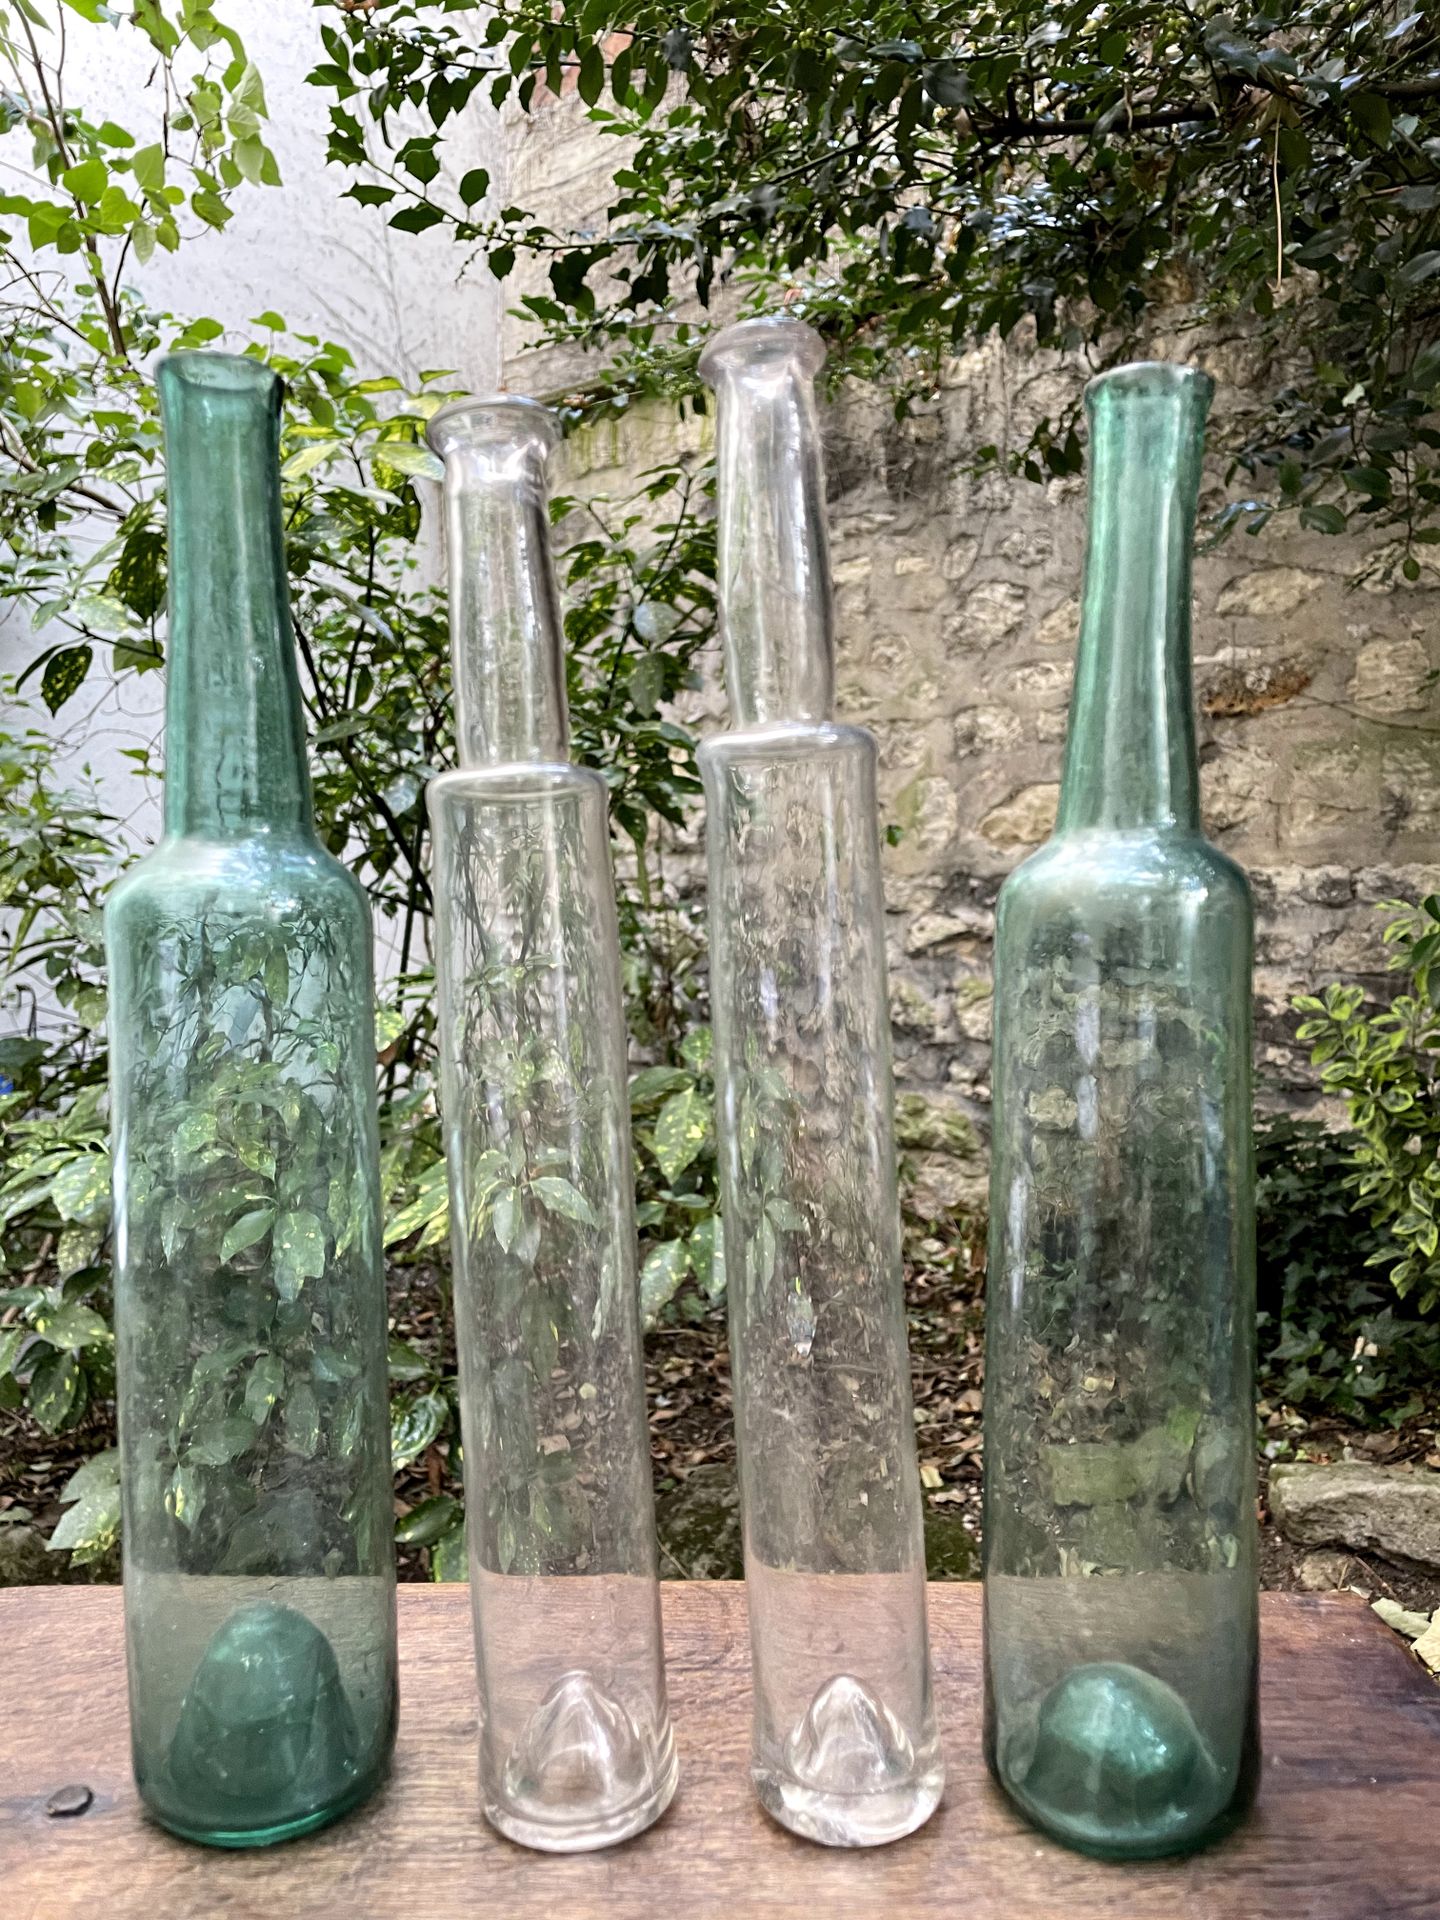 Null 四个玻璃瓶，其中一对是蓝绿色的。

18世纪晚期

一个的高度：28厘米